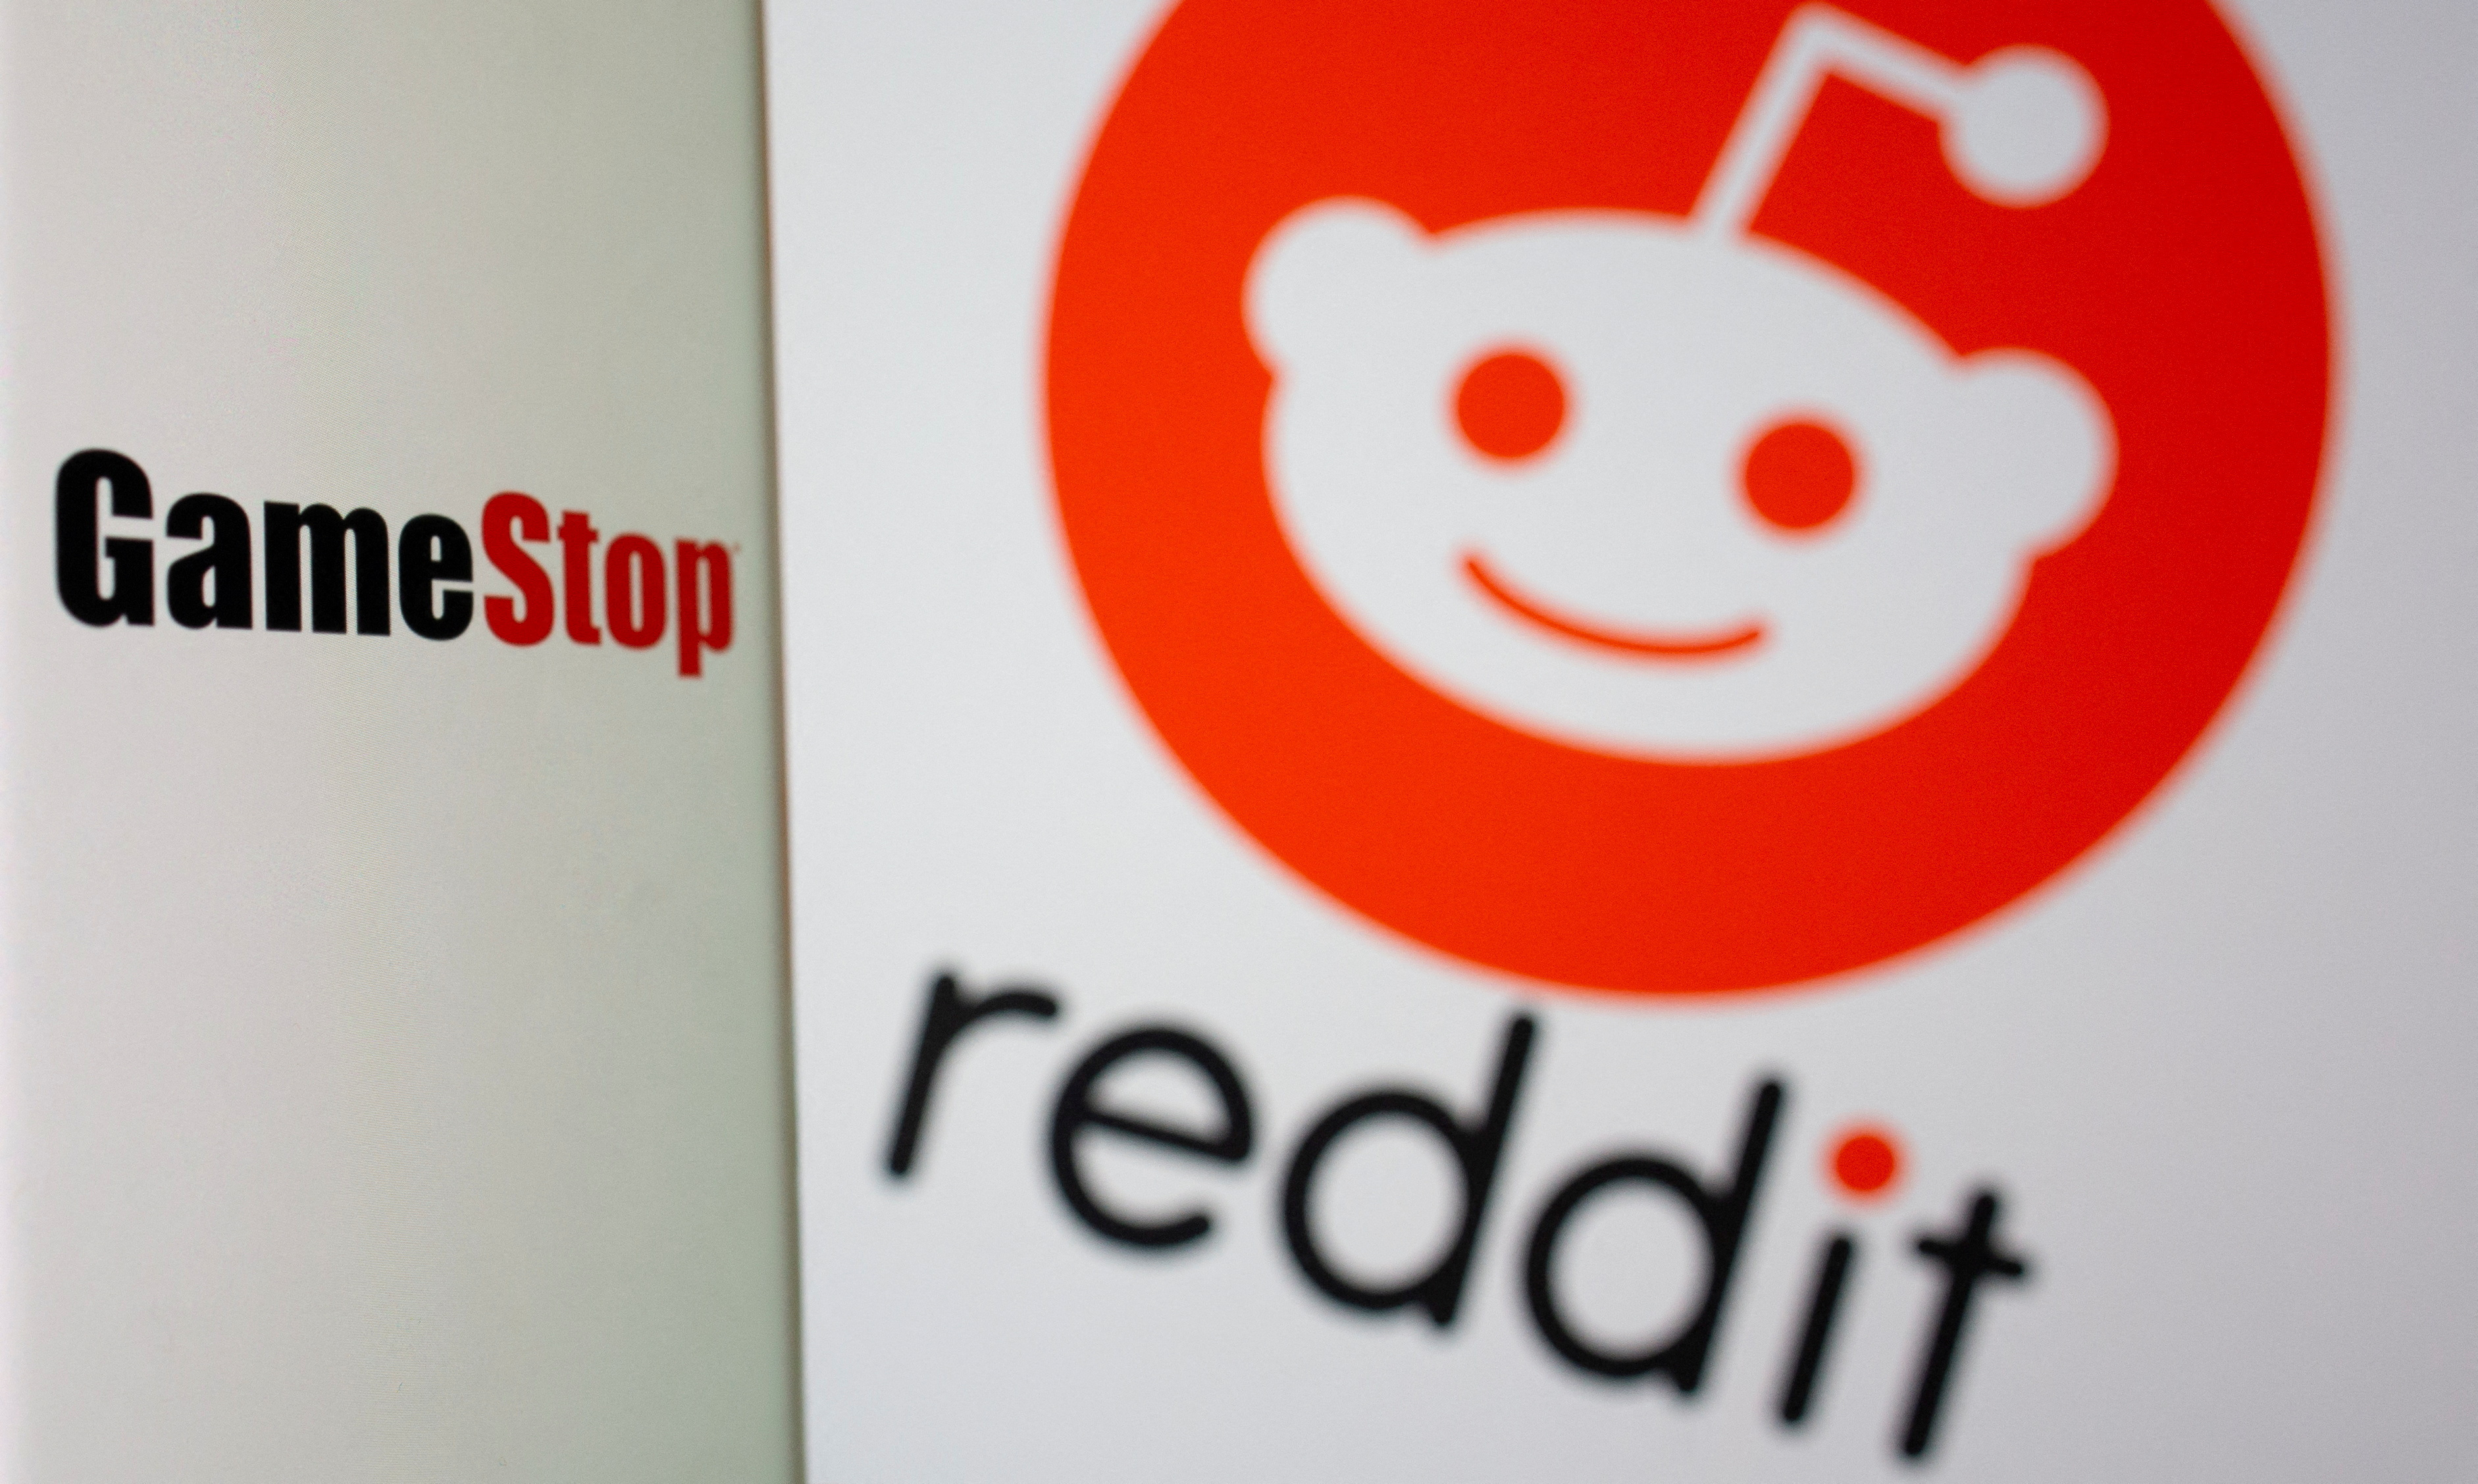 GameStop logo is seen in front of displayed Reddit logo in this illustration